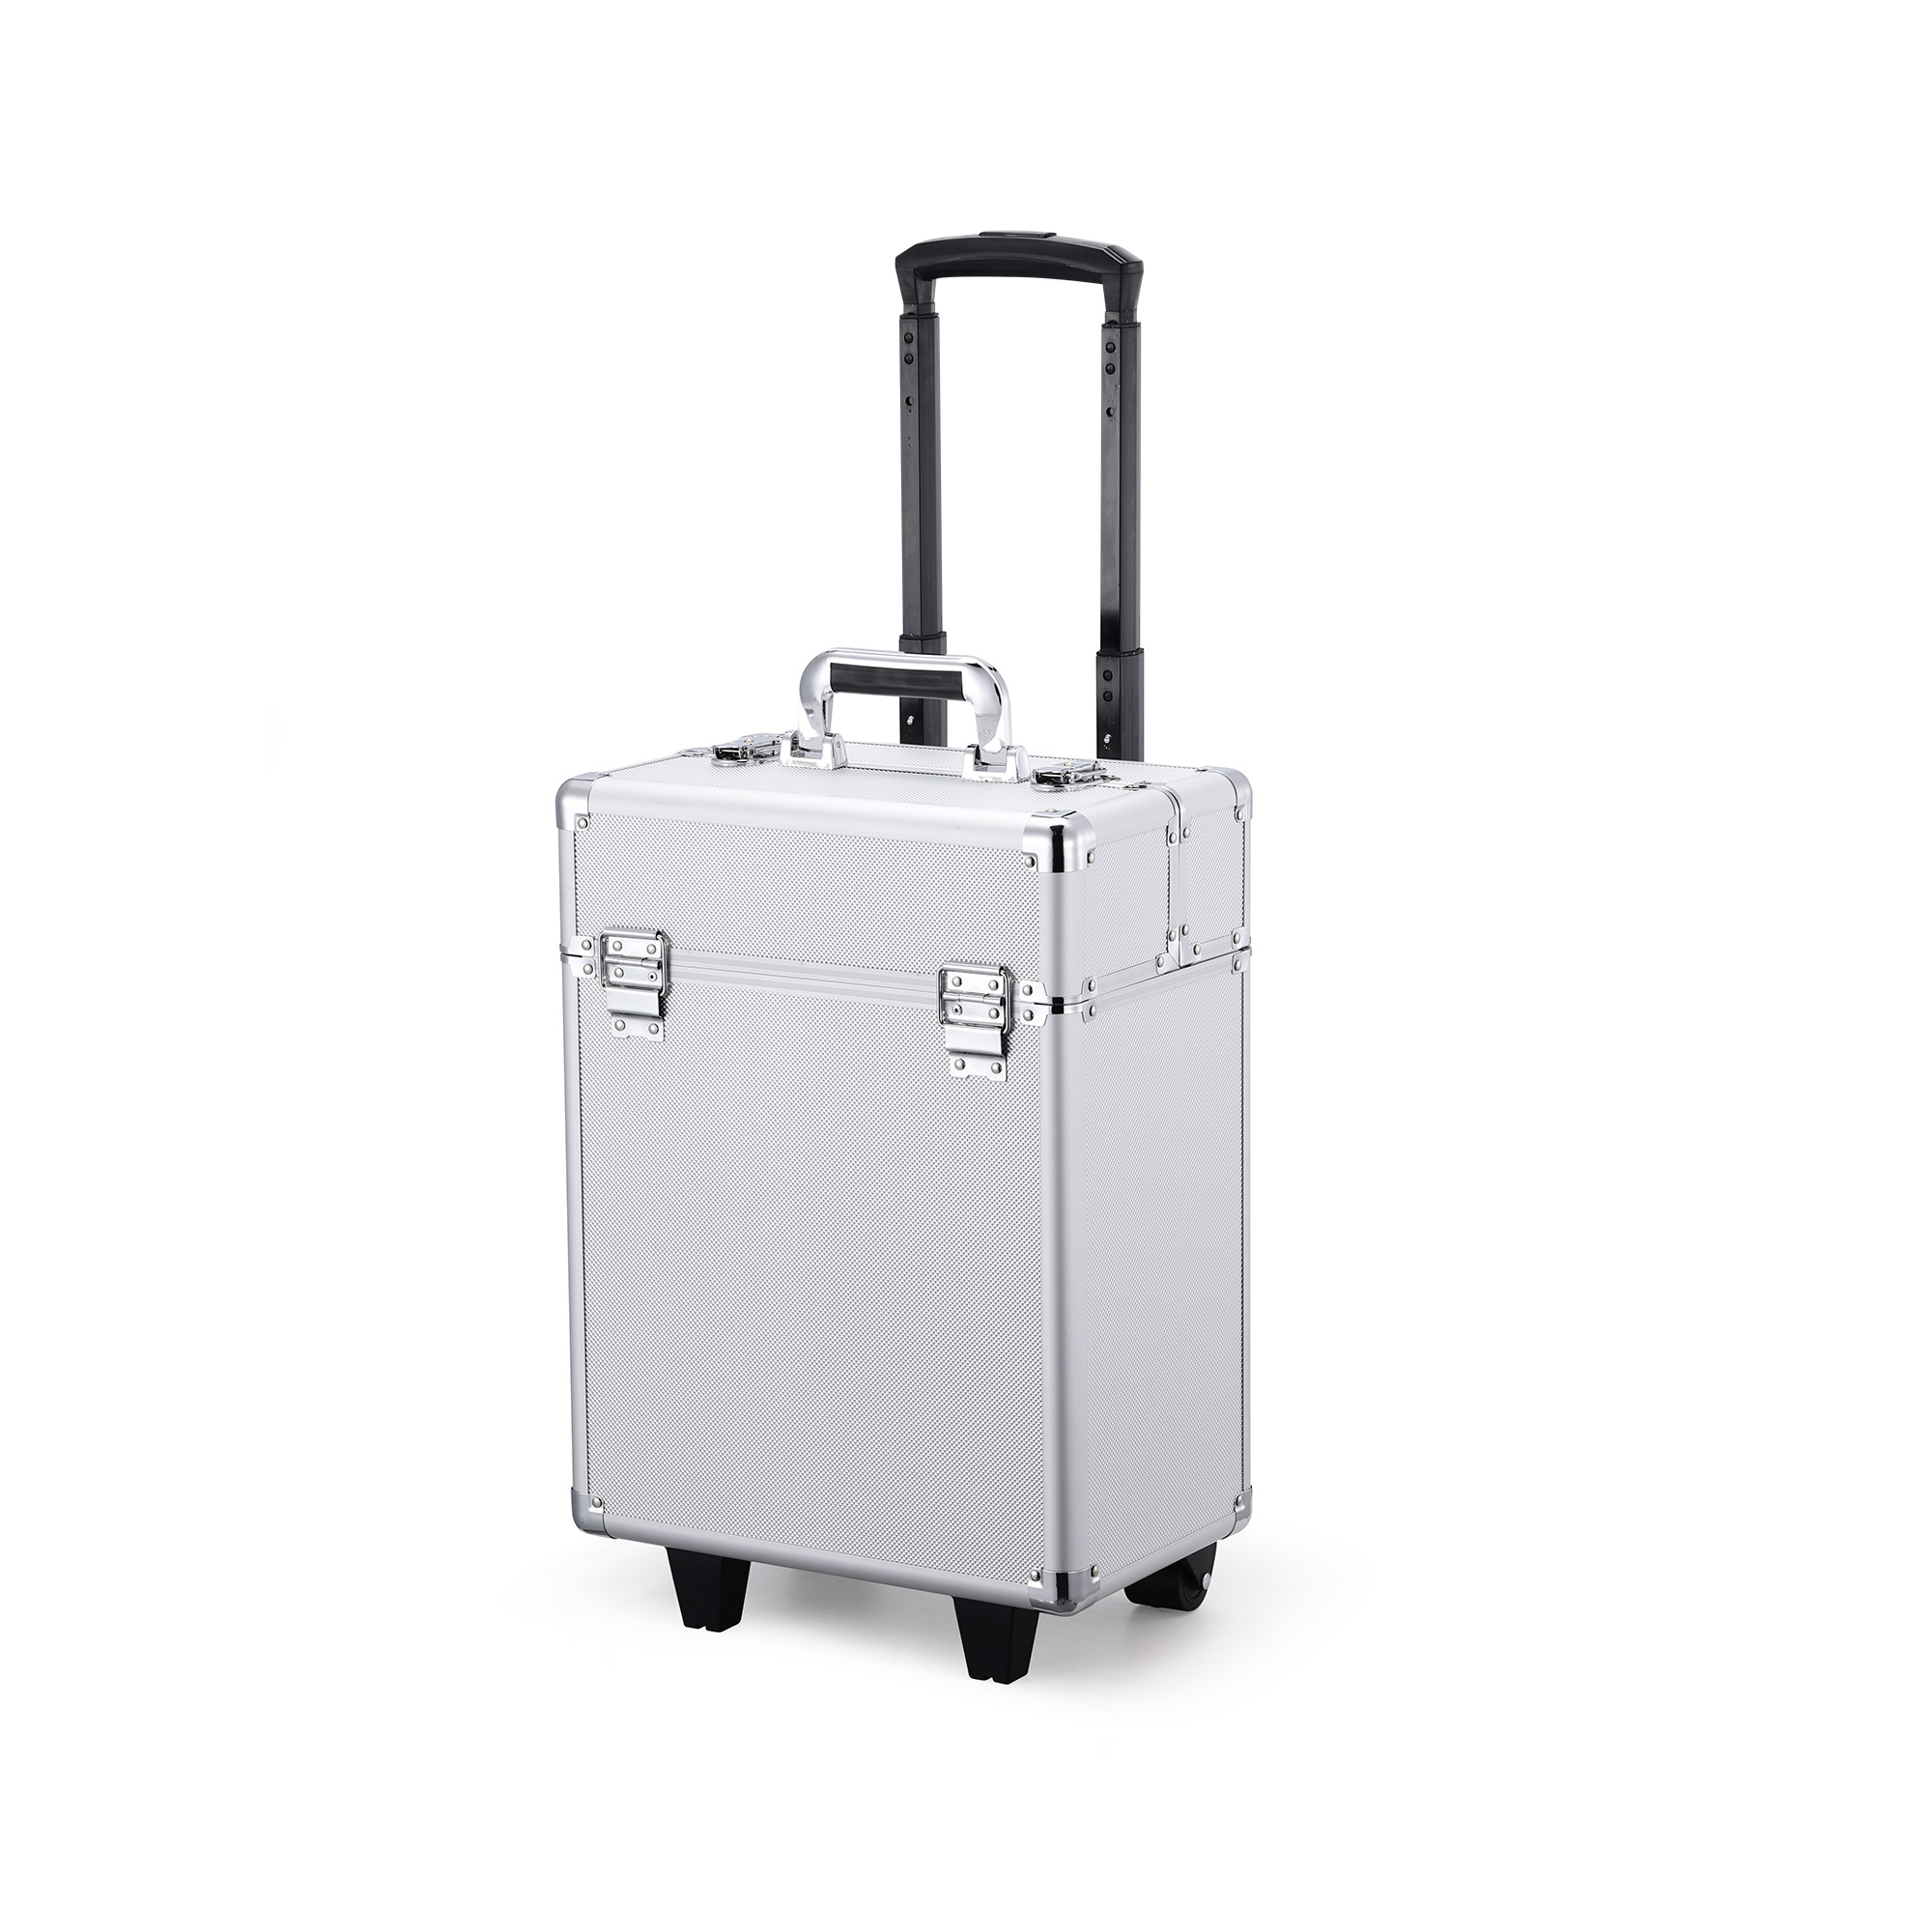 Balance portable 10 kg ressort pese valise bagage peche pas cher 